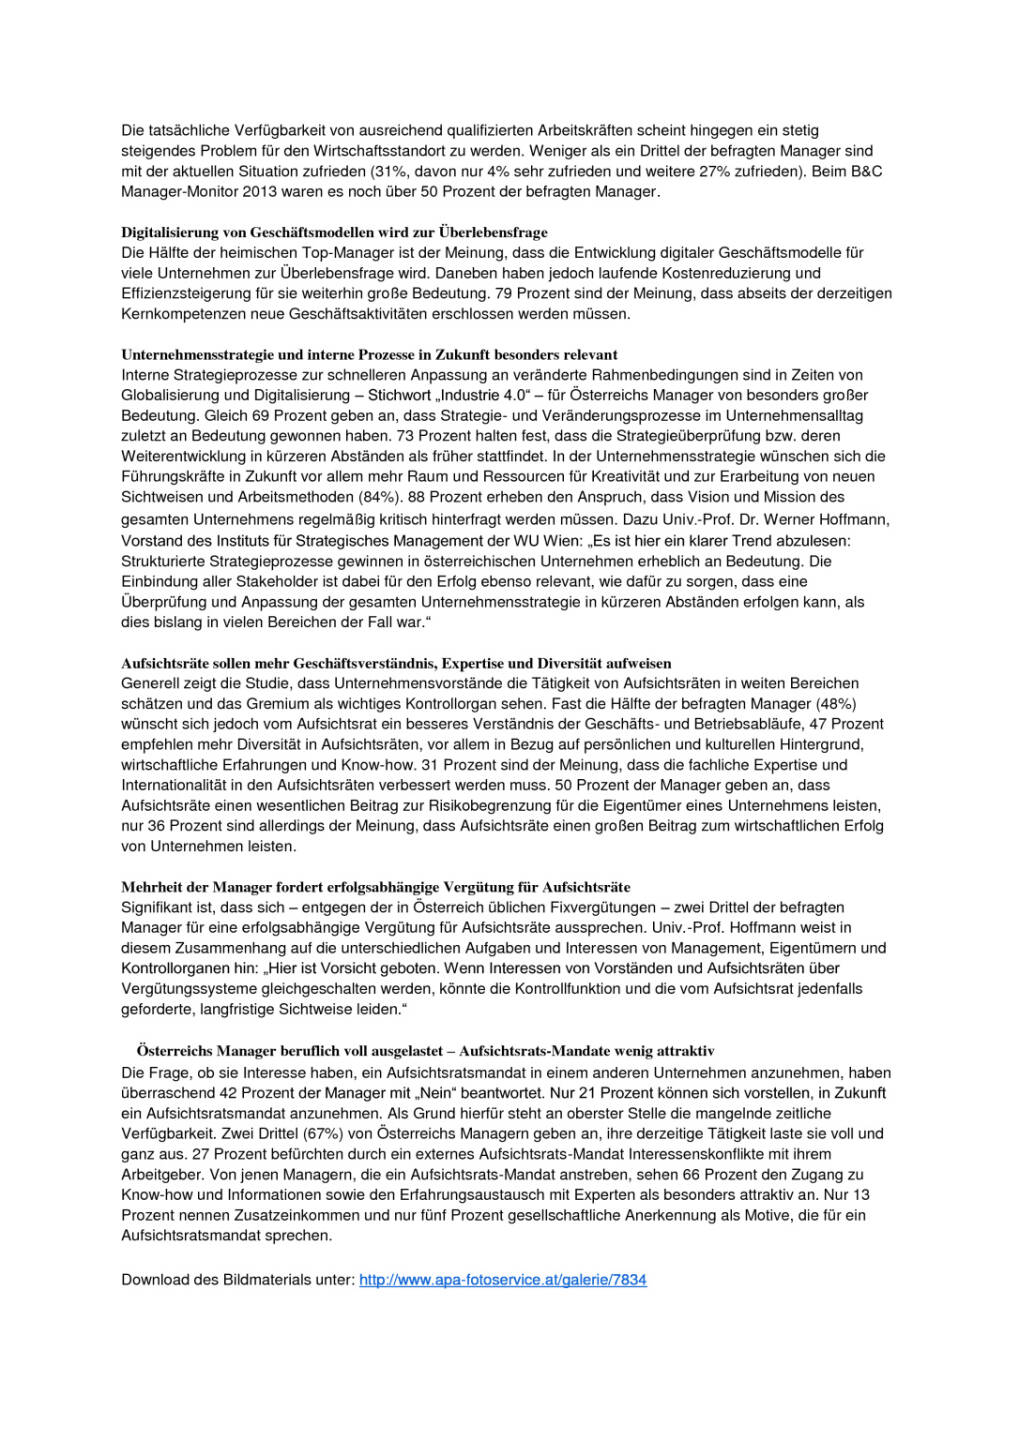 B&C Industrieholding und WU Wien präsentieren „Manager-Monitor 2016“, Seite 2/3, komplettes Dokument unter http://boerse-social.com/static/uploads/file_1274_bc_industrieholding_und_wu_wien_prasentieren_manager-monitor_2016.pdf